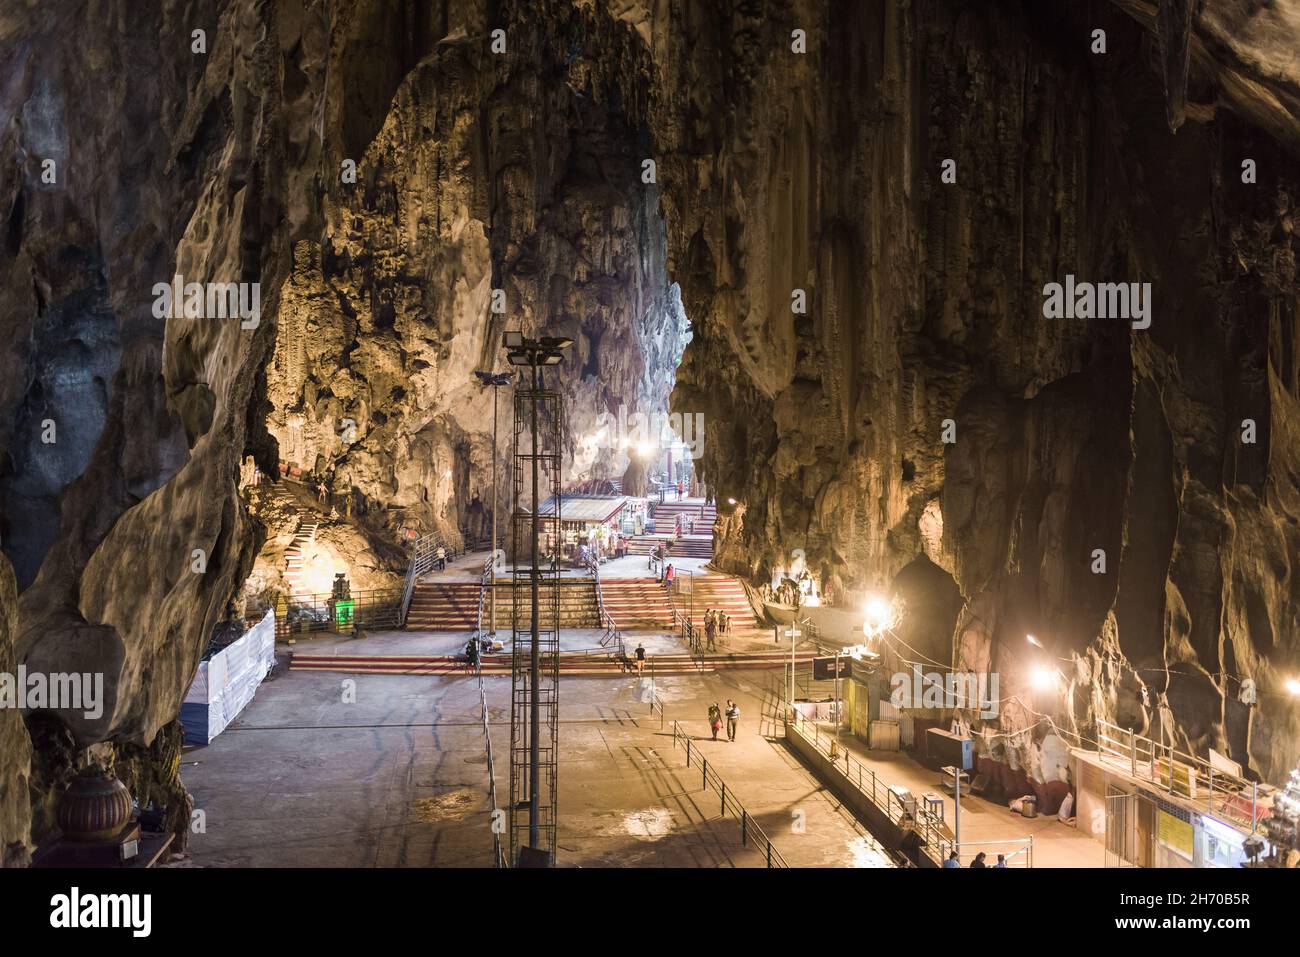 Selangor, Malaysia, 09 Aug 2015: Spacious interior of popular tourist detination batu caves. Stock Photo